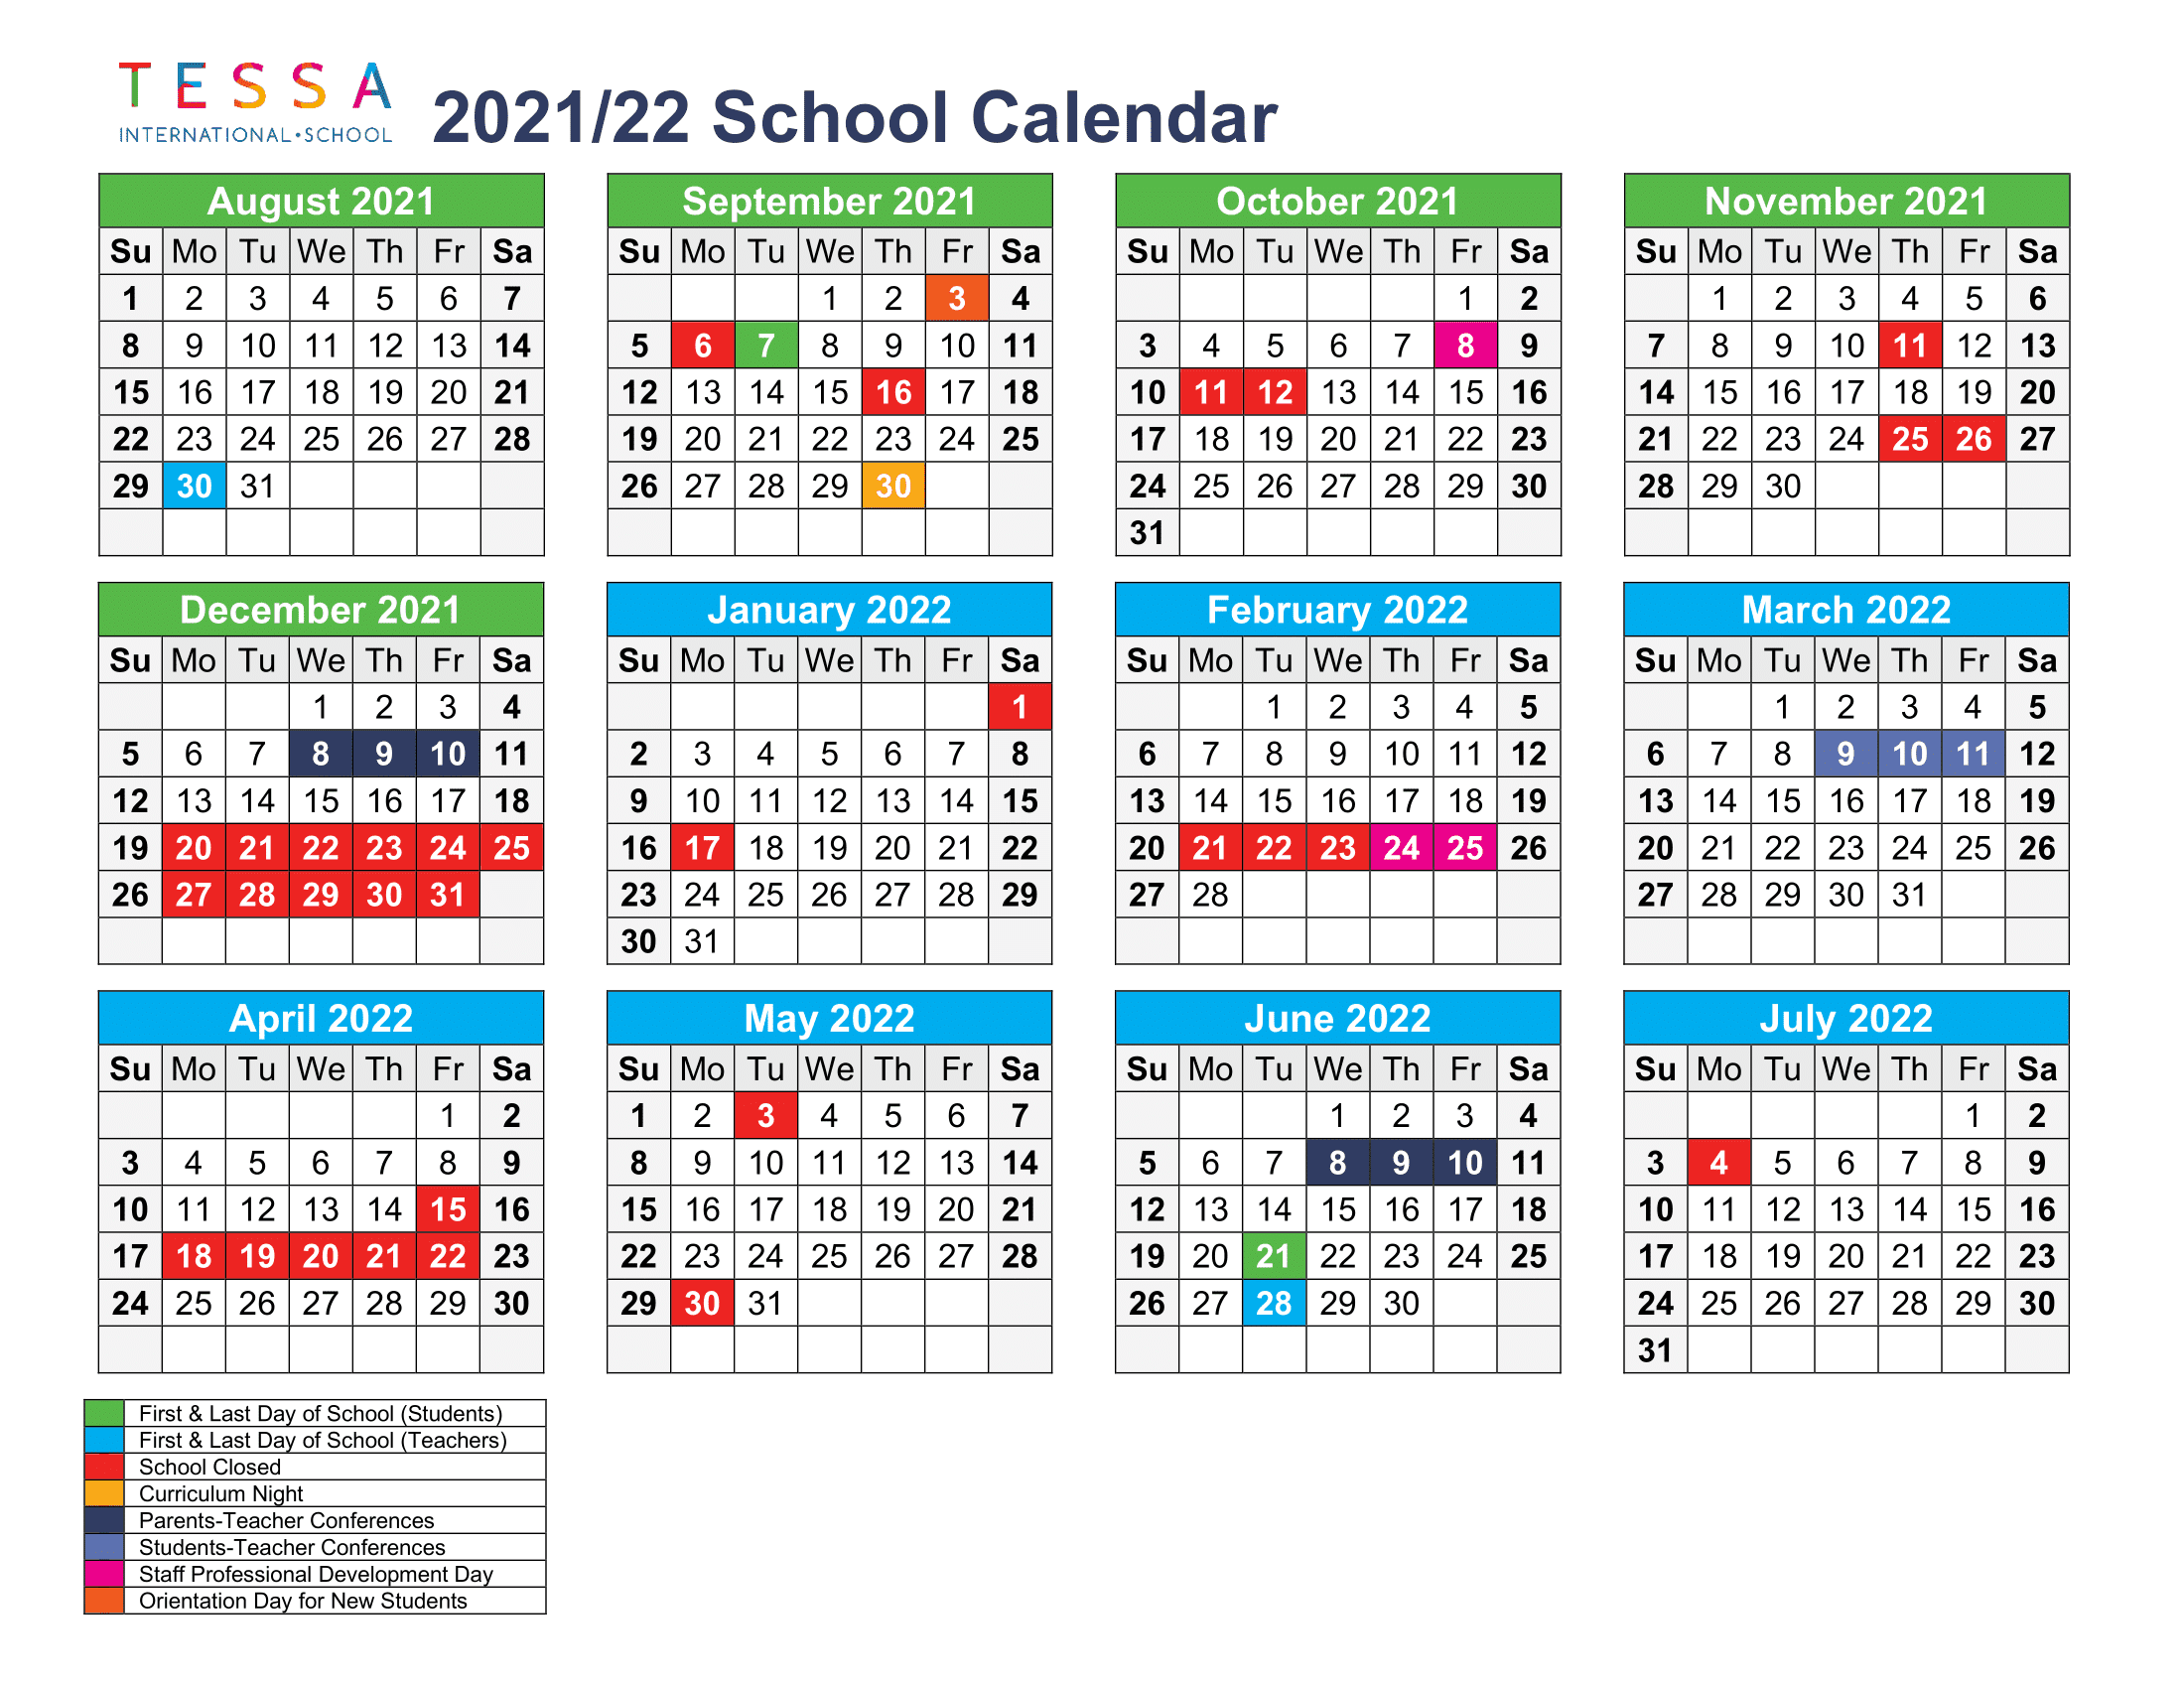 Su Academic Calendar 2022 Academic-Calendar-2021-2022-1 - Tessa International School